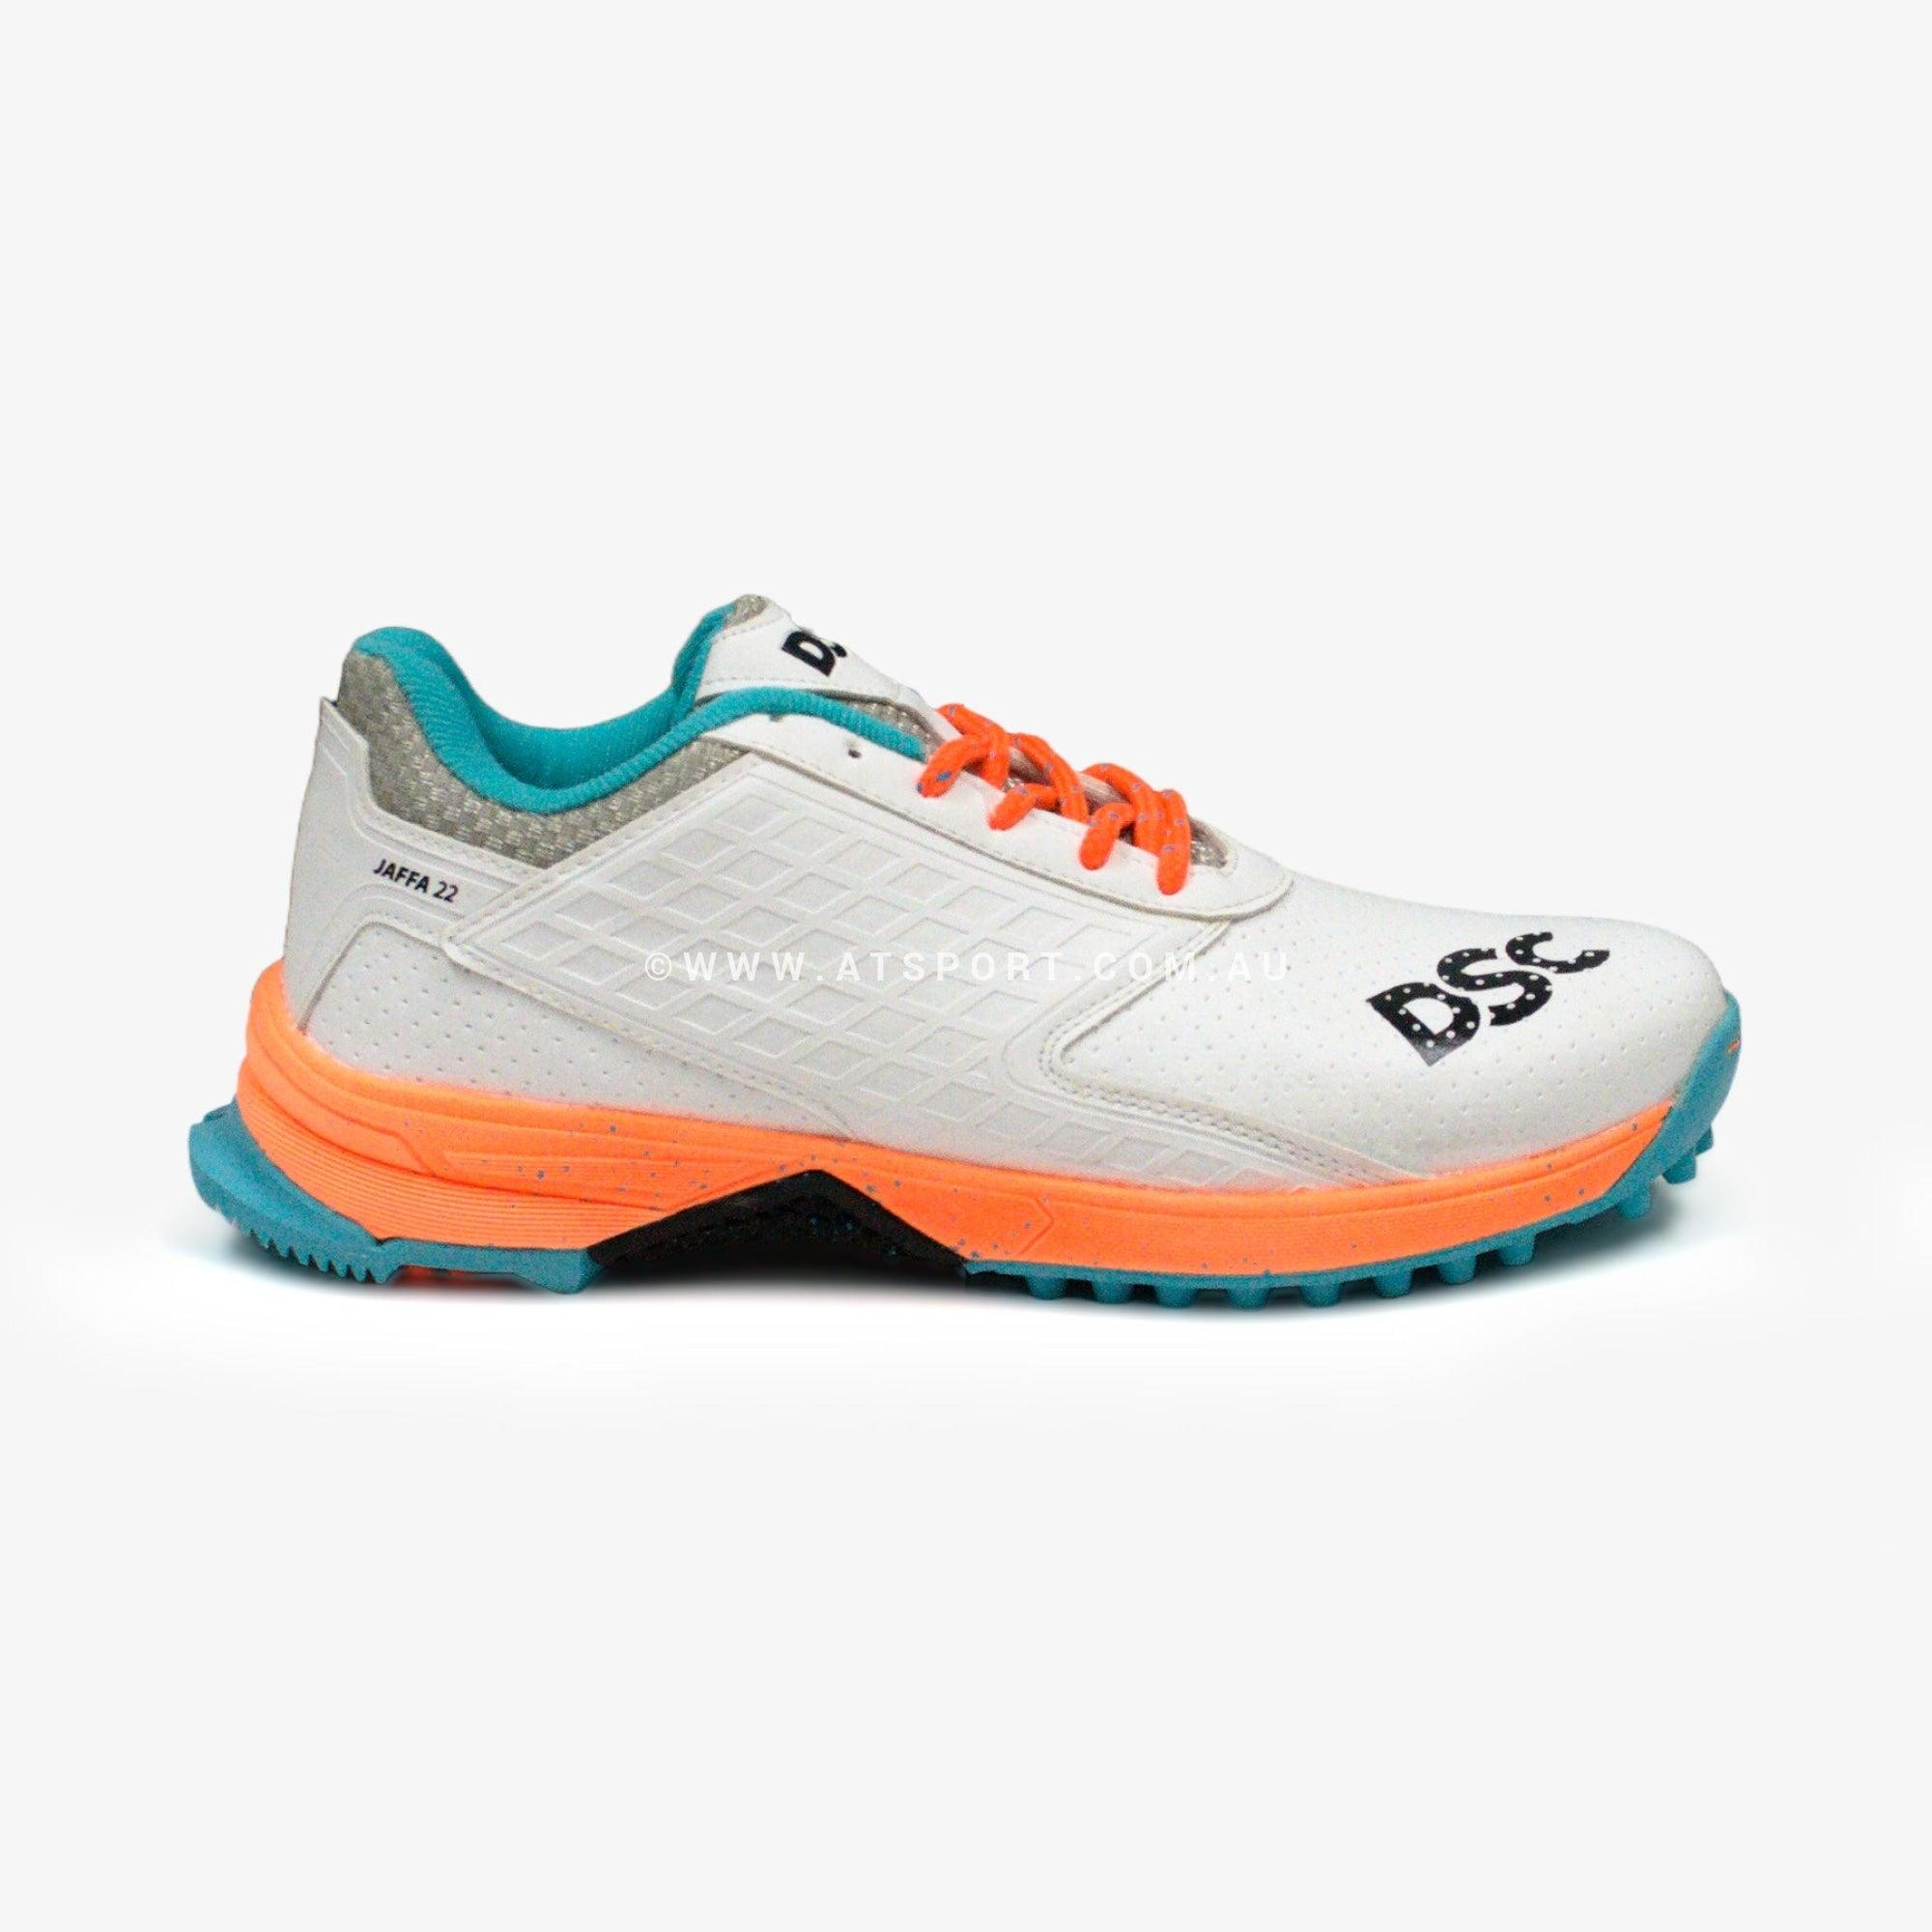 DSC Jaffa 22 Rubber Cricket Shoes - Teal / Orange - AT Sports